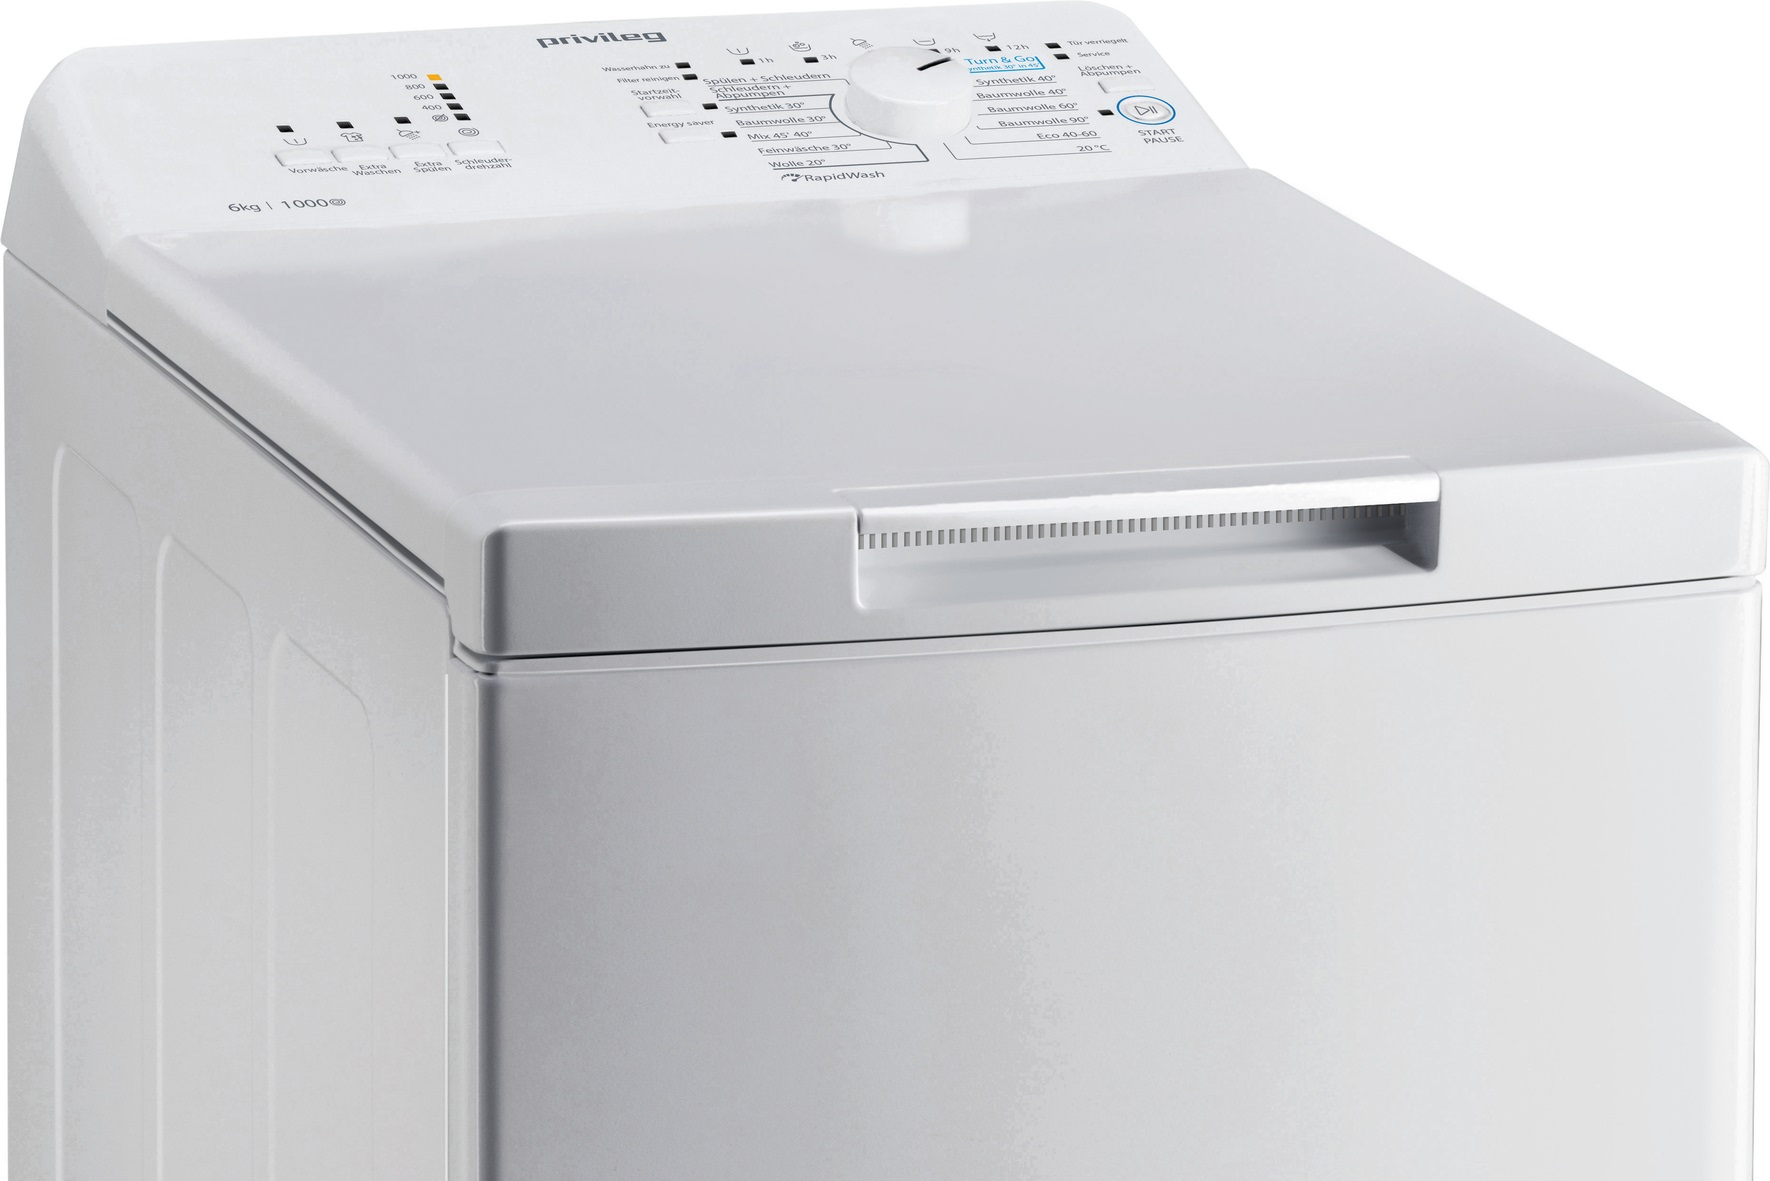 PRIVILEG kg, DE/N 951 (6 L60300 PWT U/Min., D) Waschmaschine